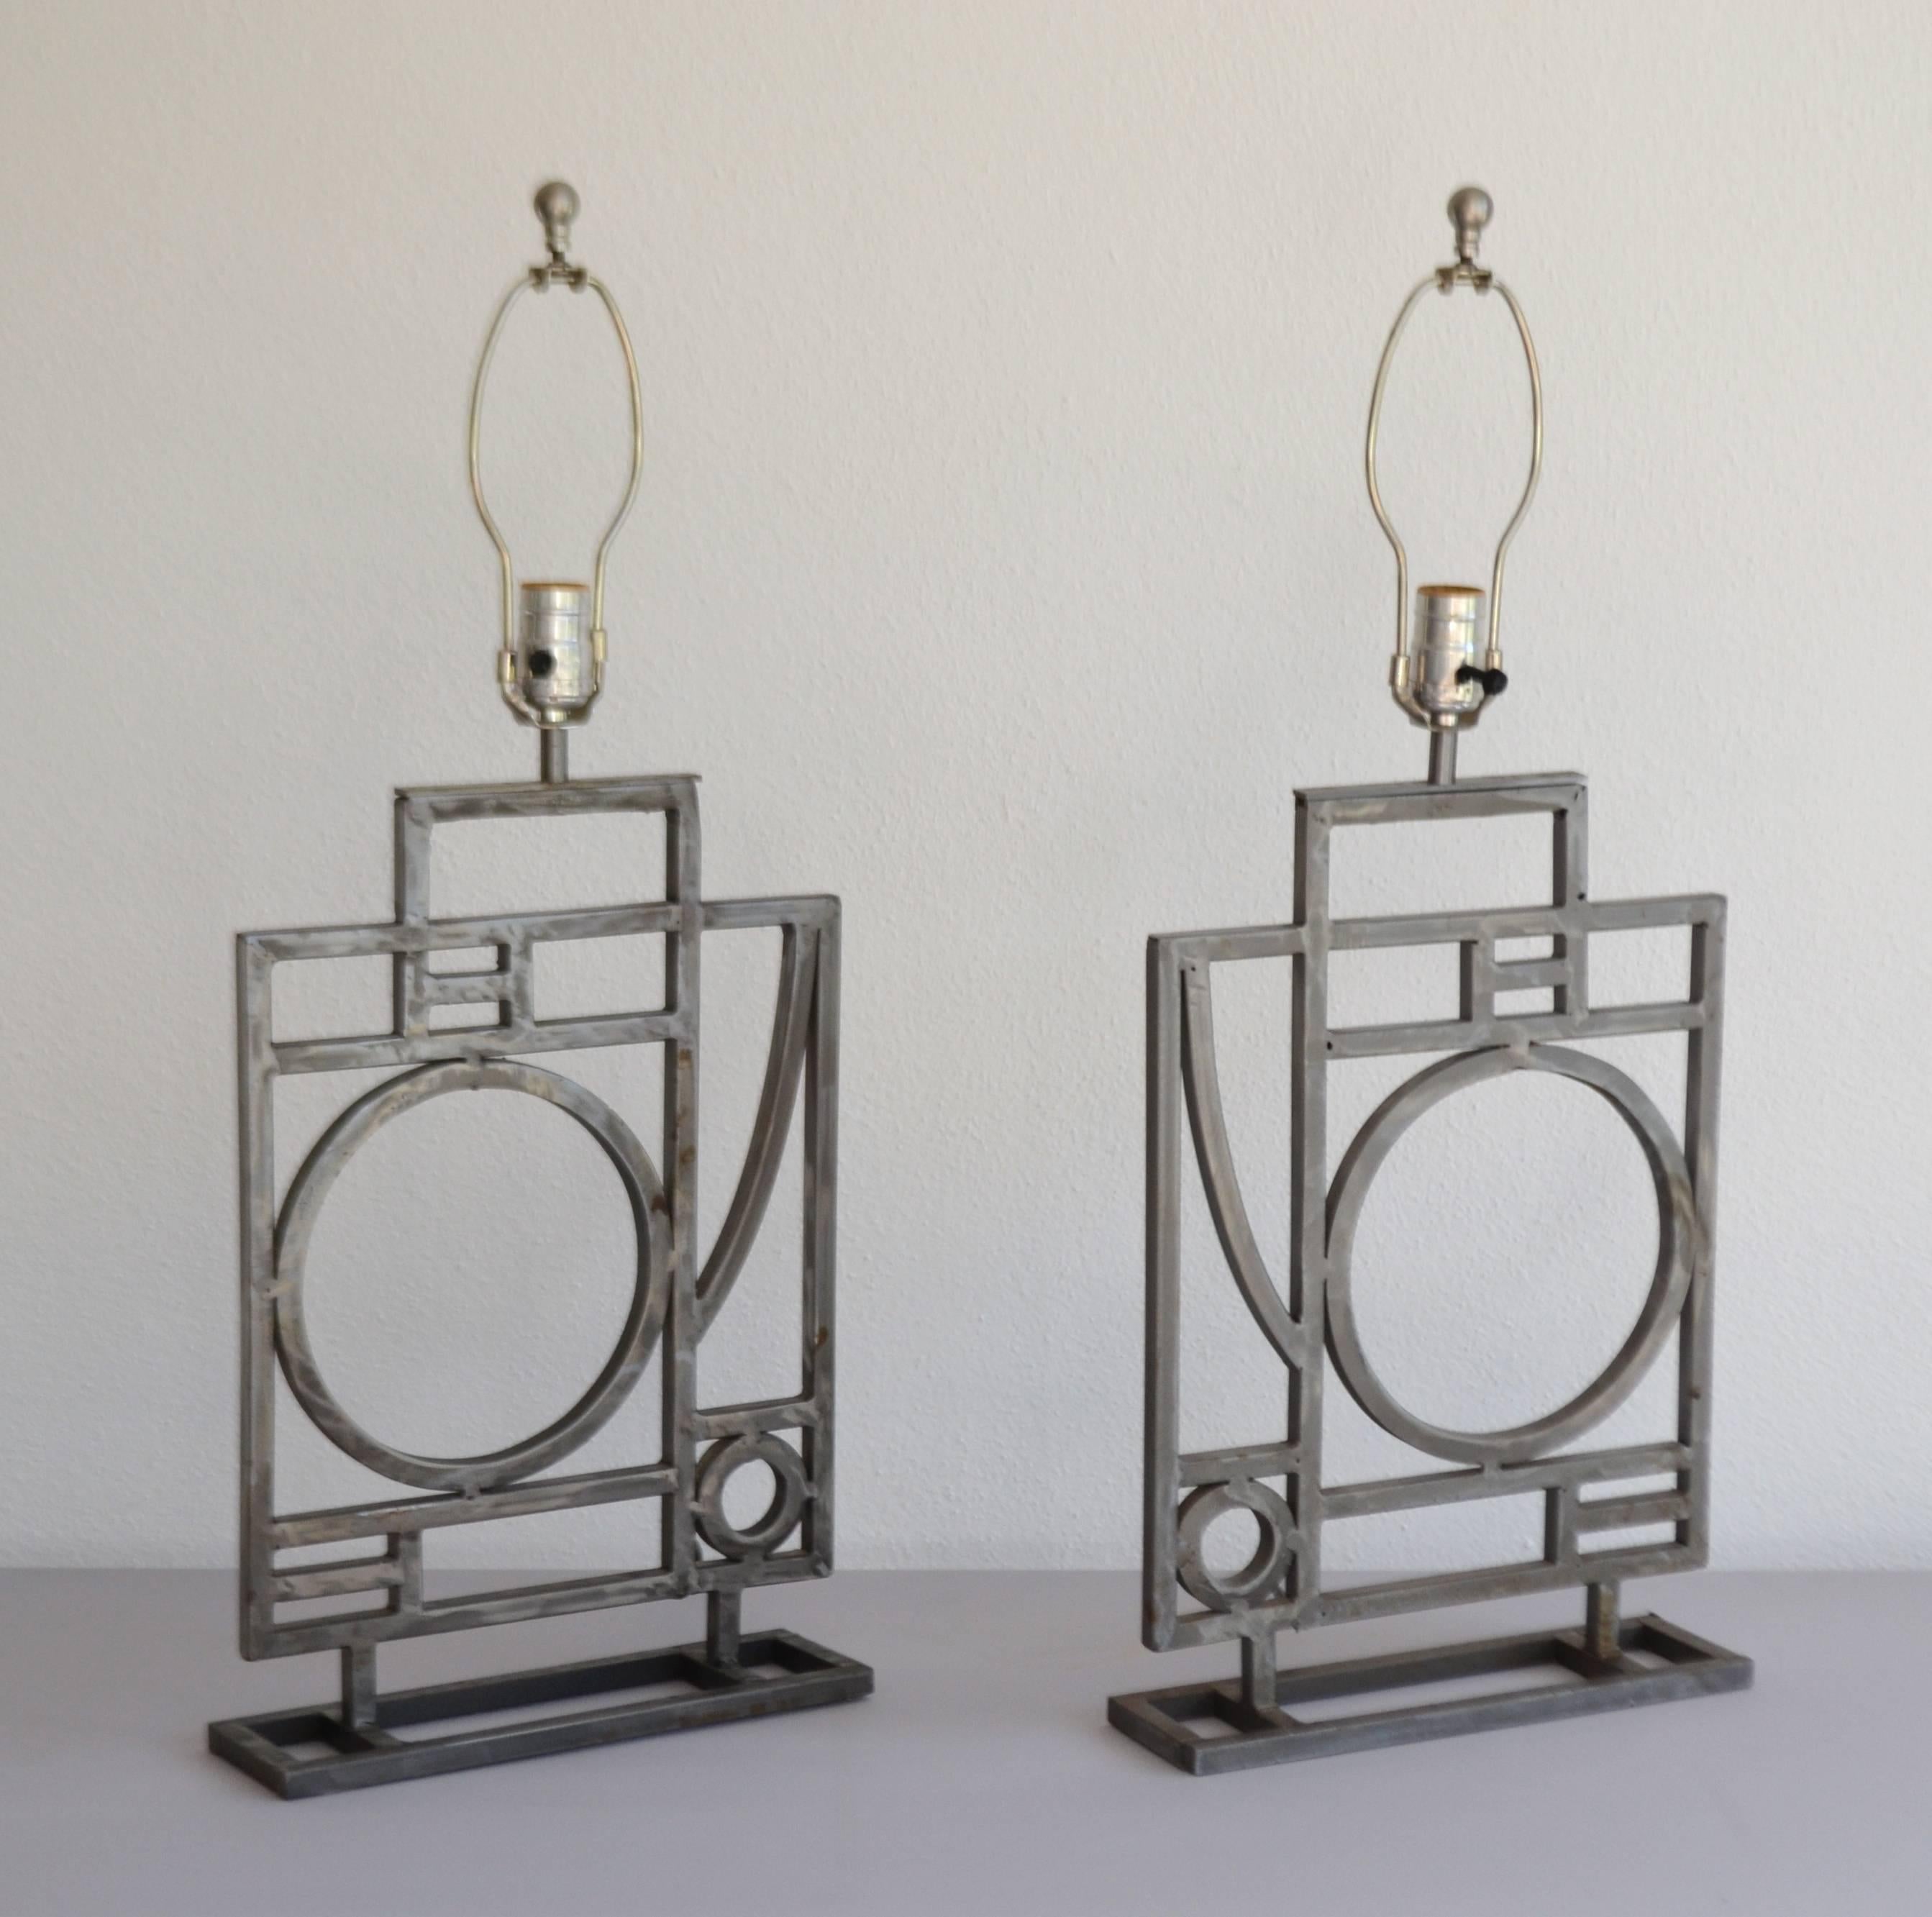 Post-Modern Pair of Postmodern Geometrical Form Table Lamps by Robert Sonneman